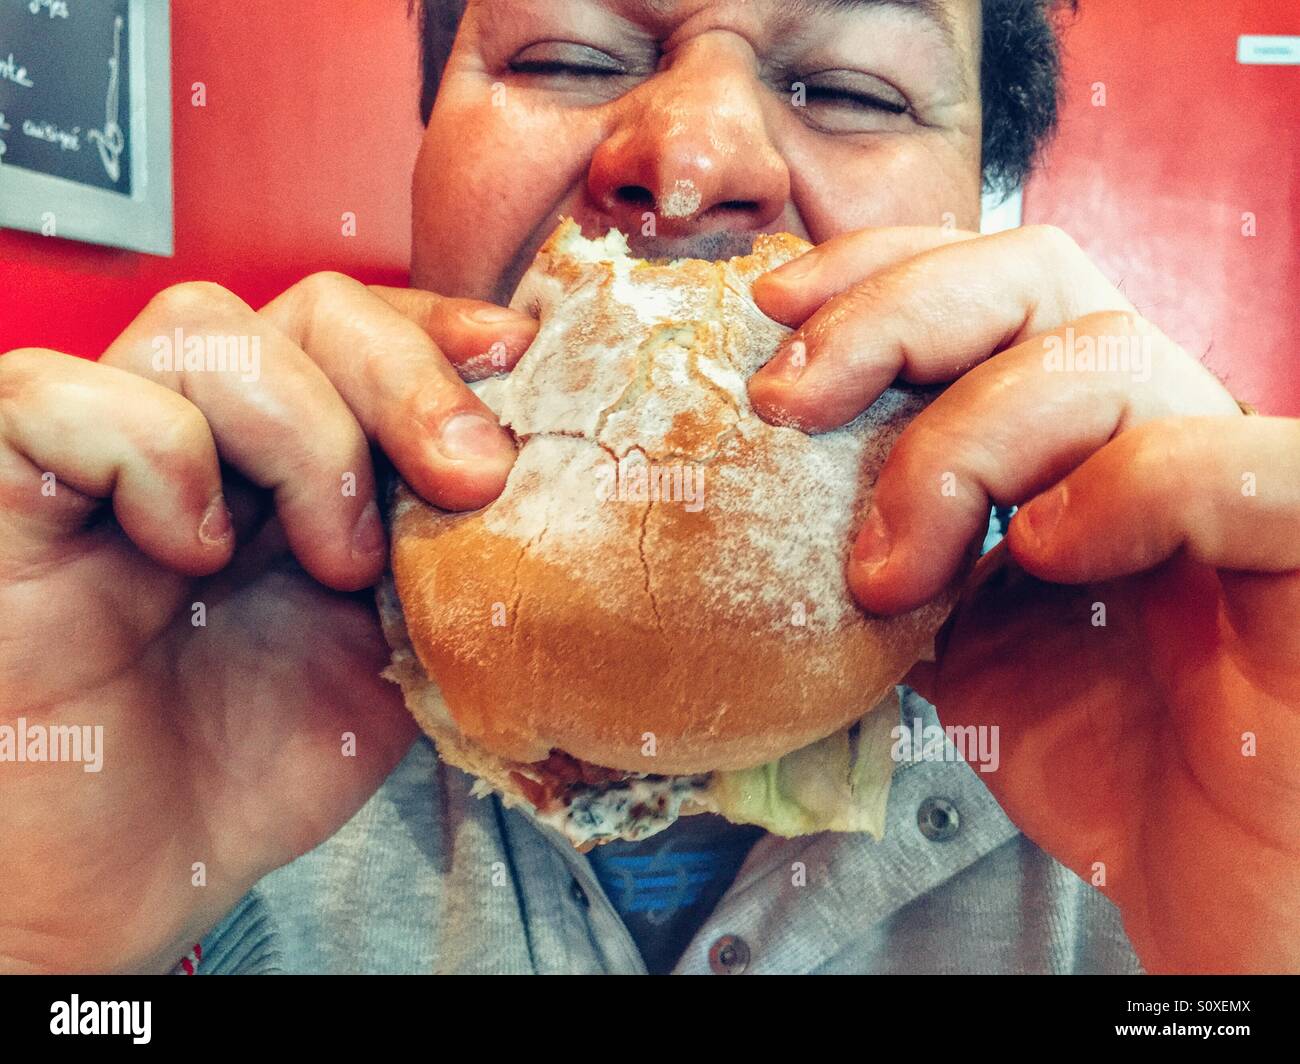 Man eating burger Stock Photo